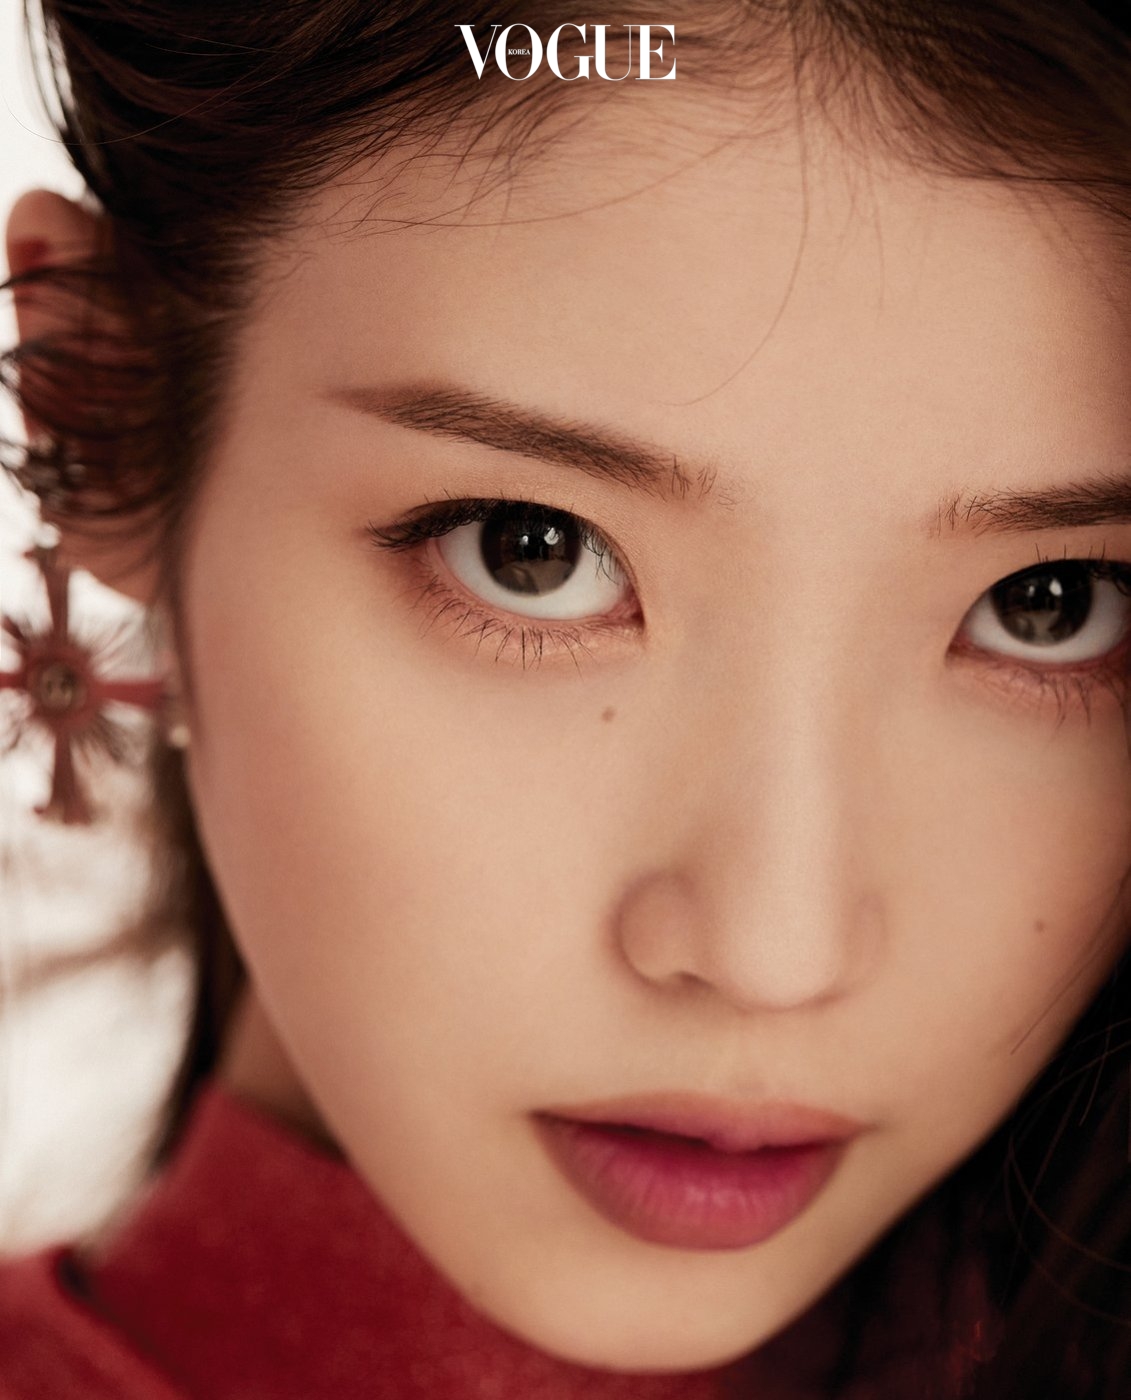 IU Face Vogue Magazine Closeup Asian Korean Women K Pop 1131x1400